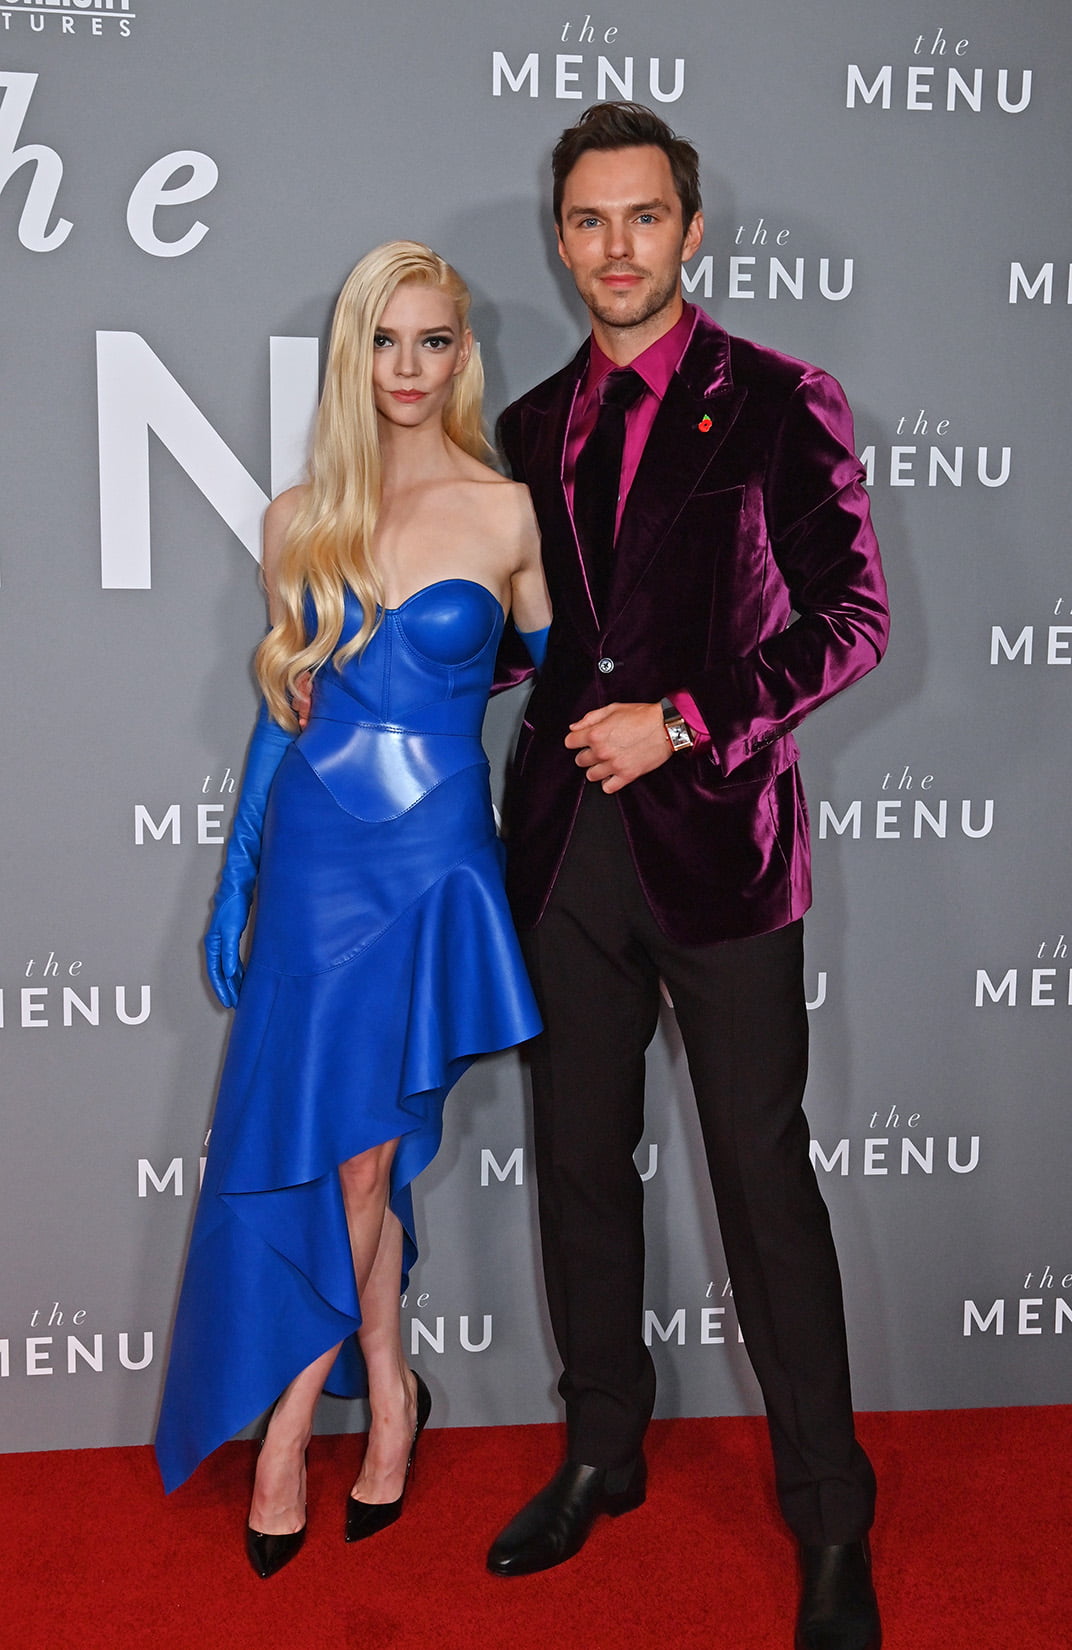 Anya Taylor-Joy and Nicholas Hoult at the World Premiere of The Menu